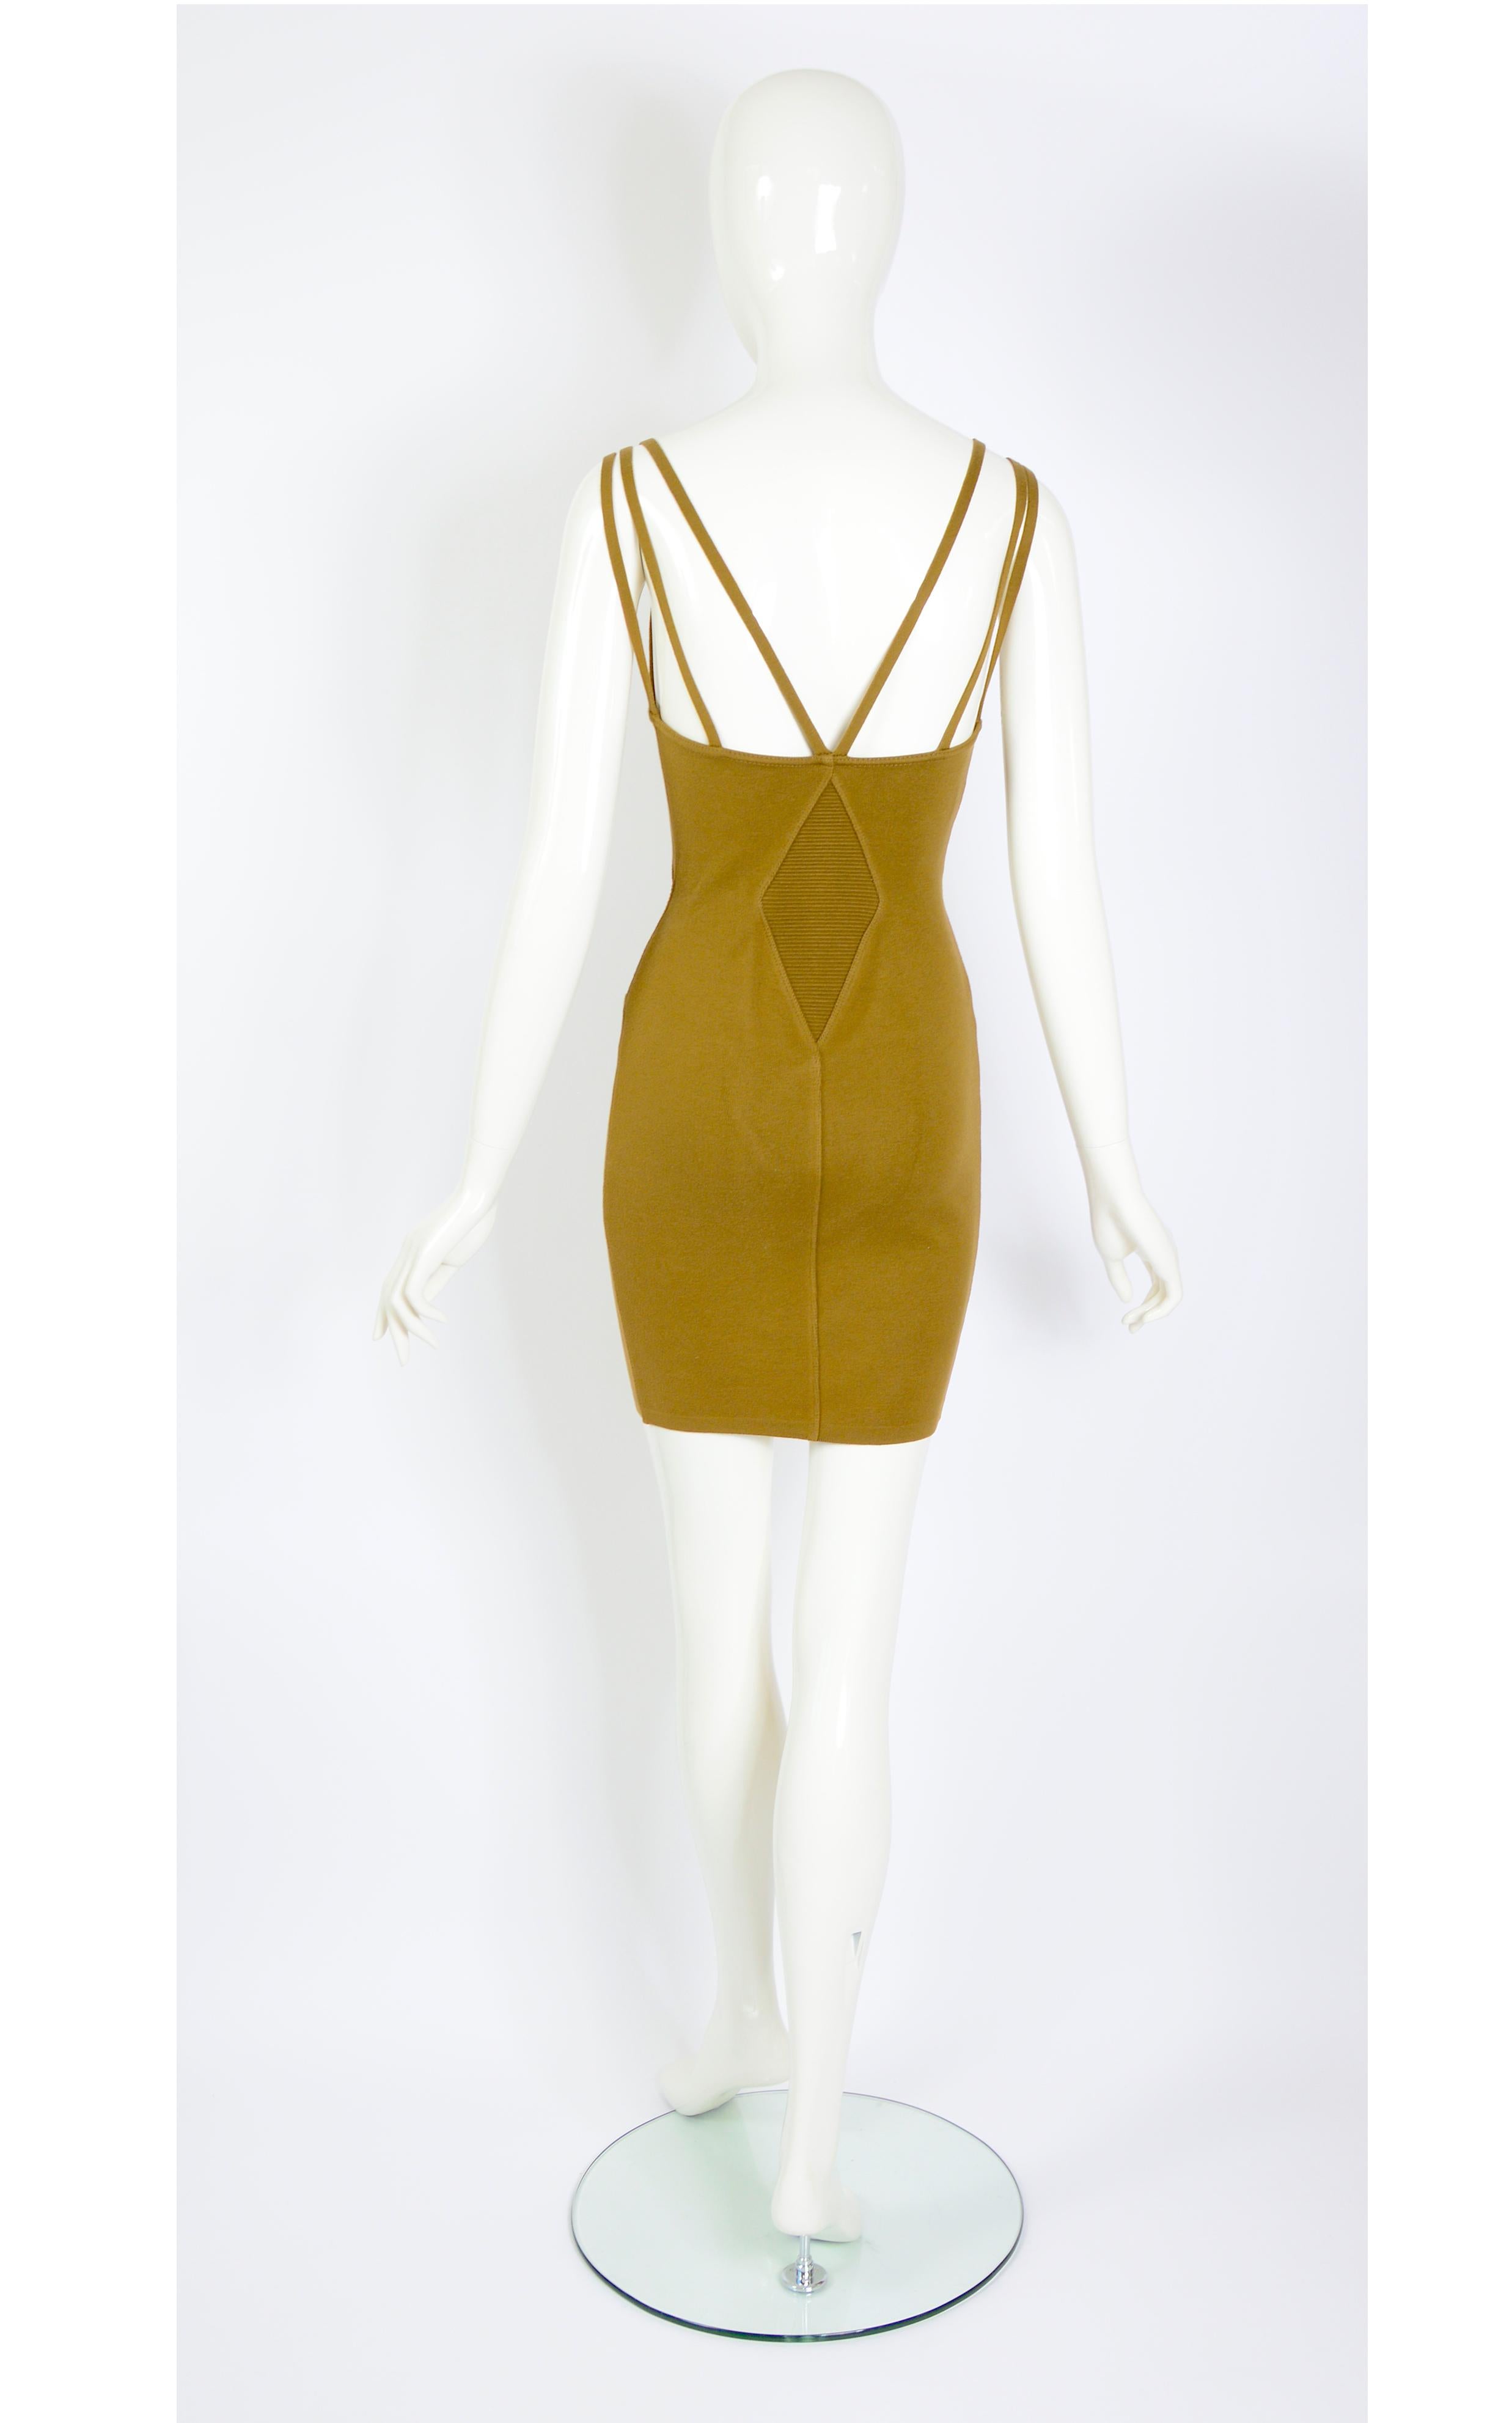 Alaïa by Azzedine Alaïa spring 1990 runway collection textured bodycon dress For Sale 1